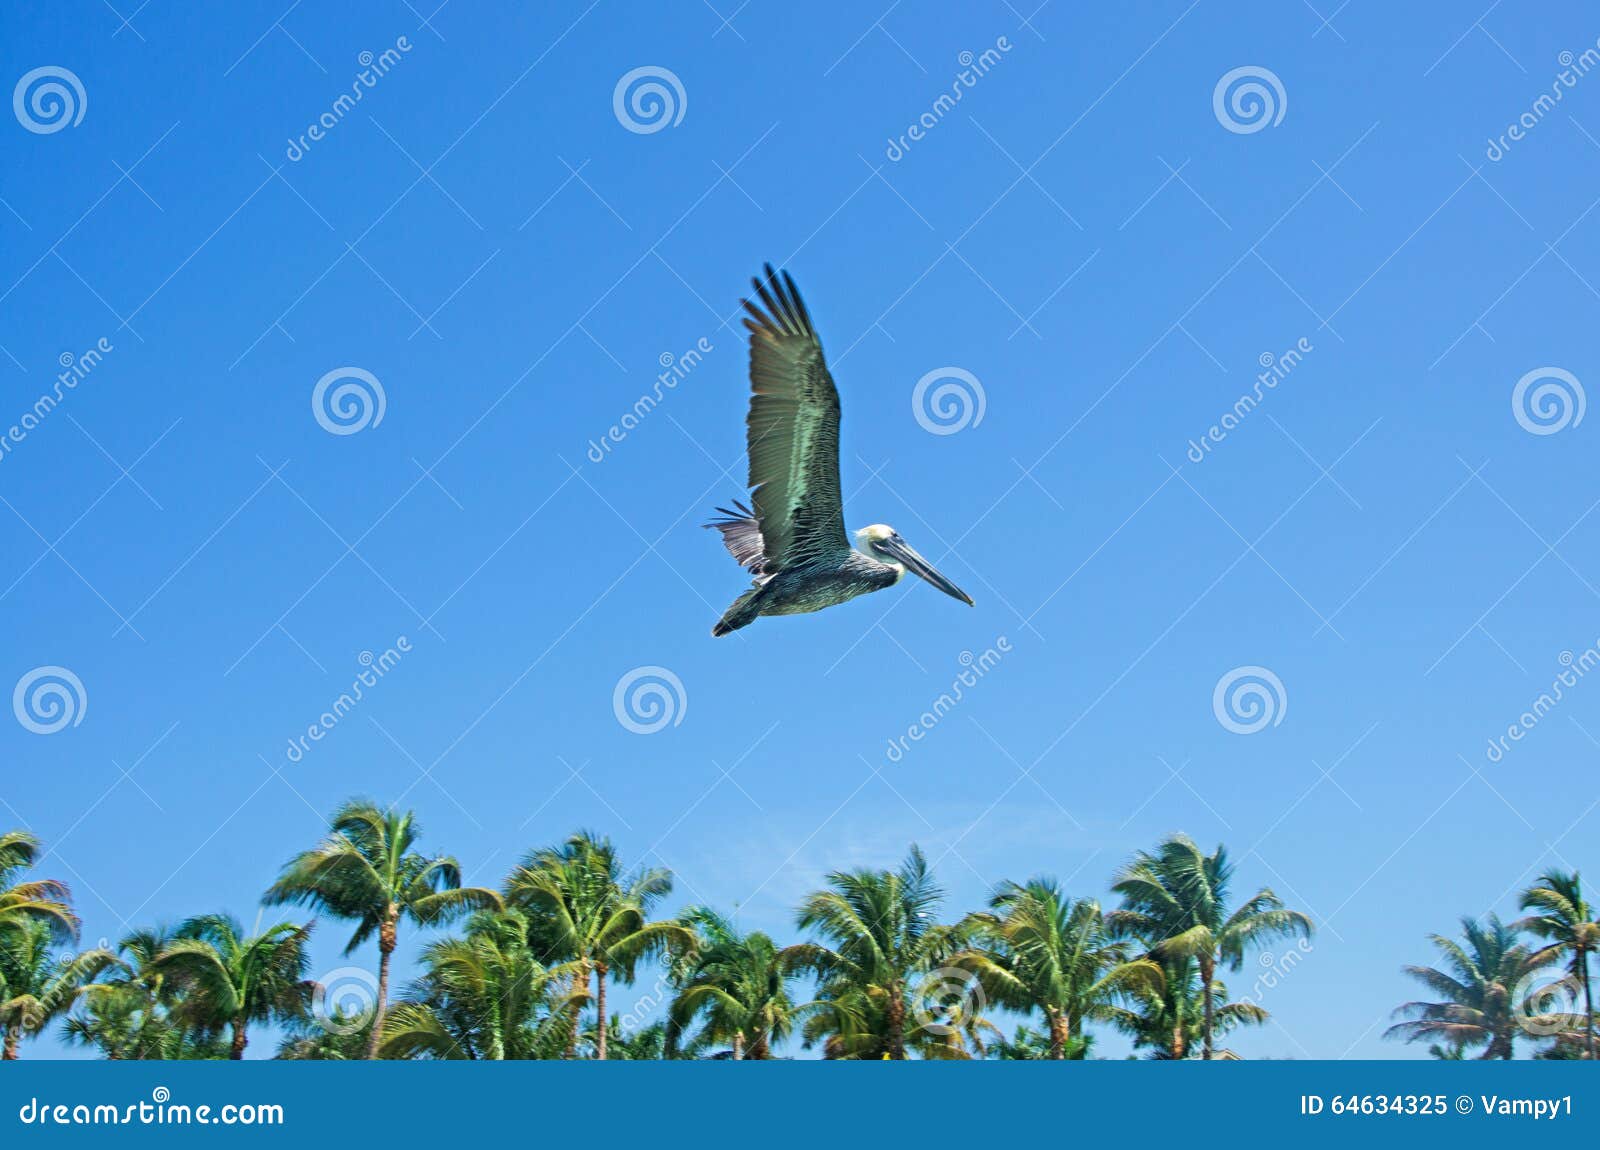 flying cormorant, palms, blue sky, freedom, key west, keys, cayo hueso, monroe county, island, florida